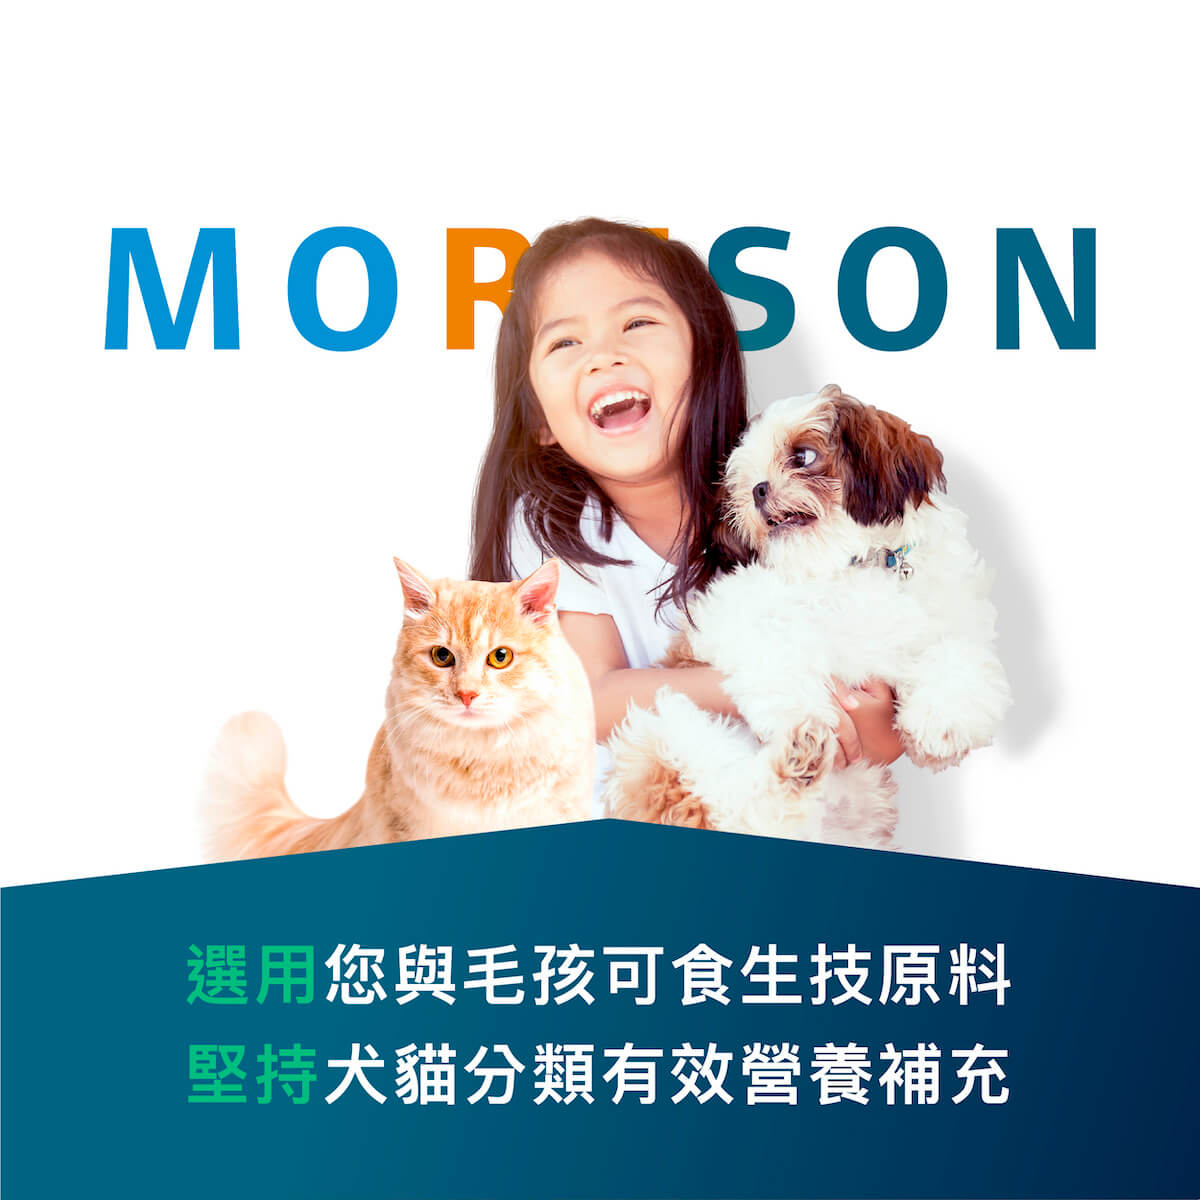 moreson-skin-health-intro1.jpg